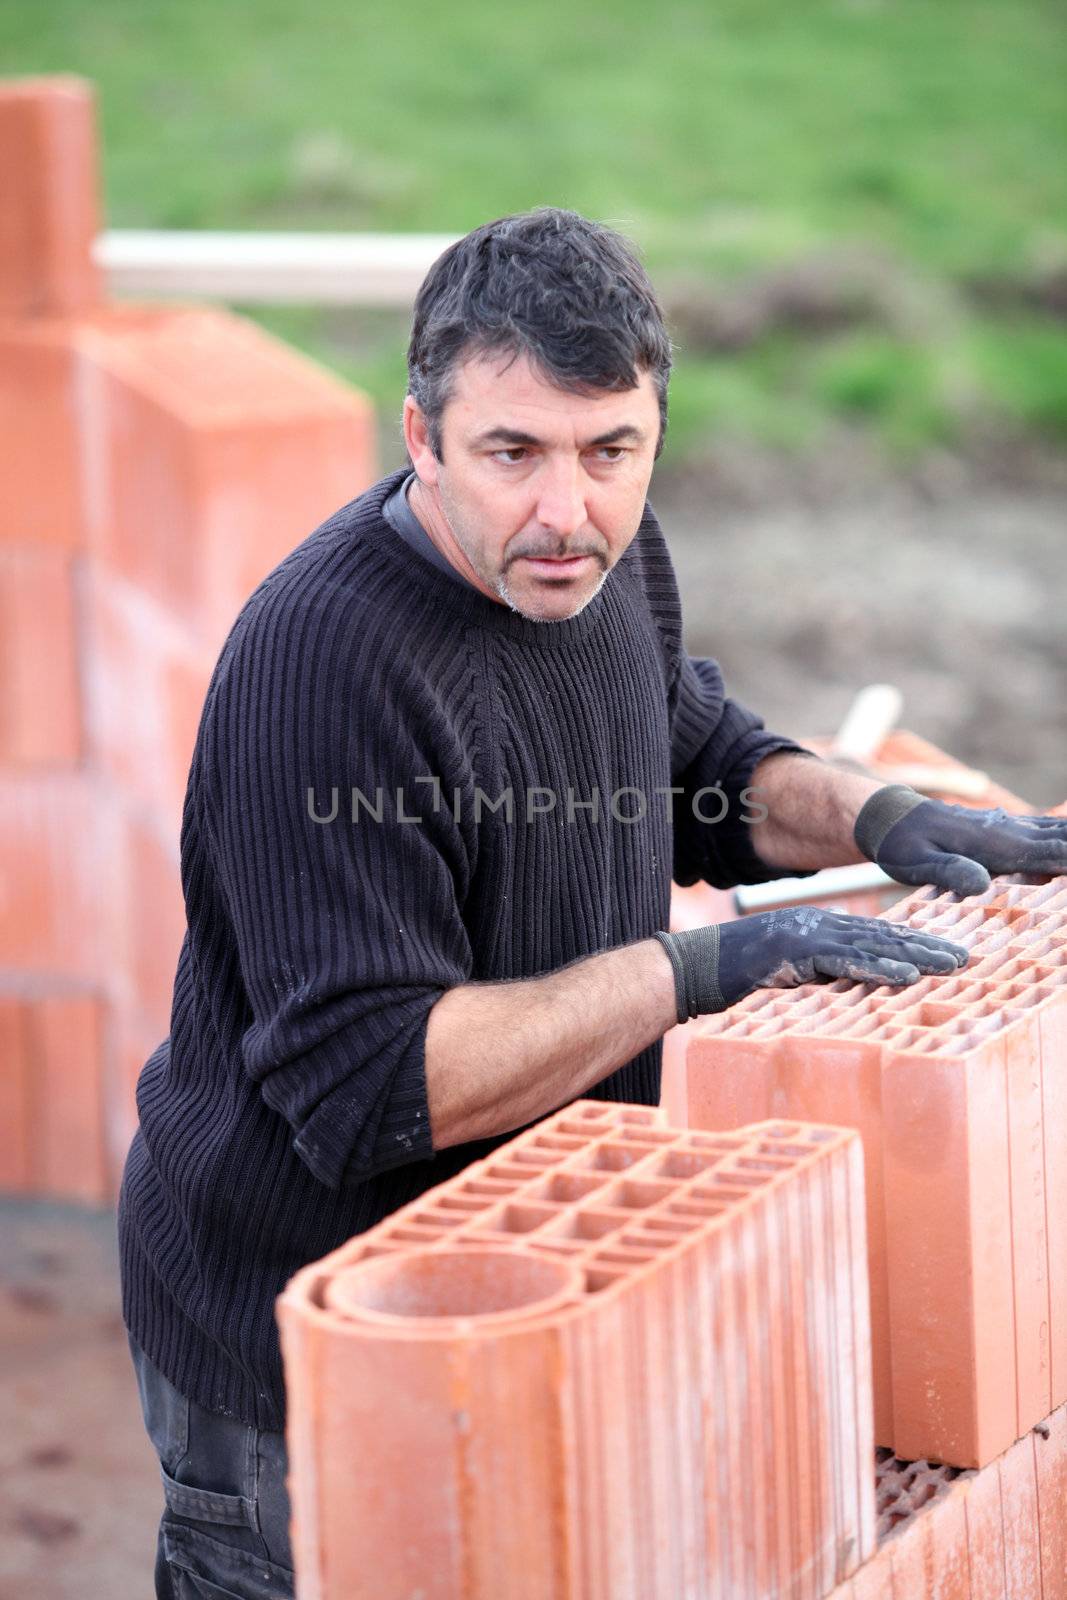 A hard-working bricklayer